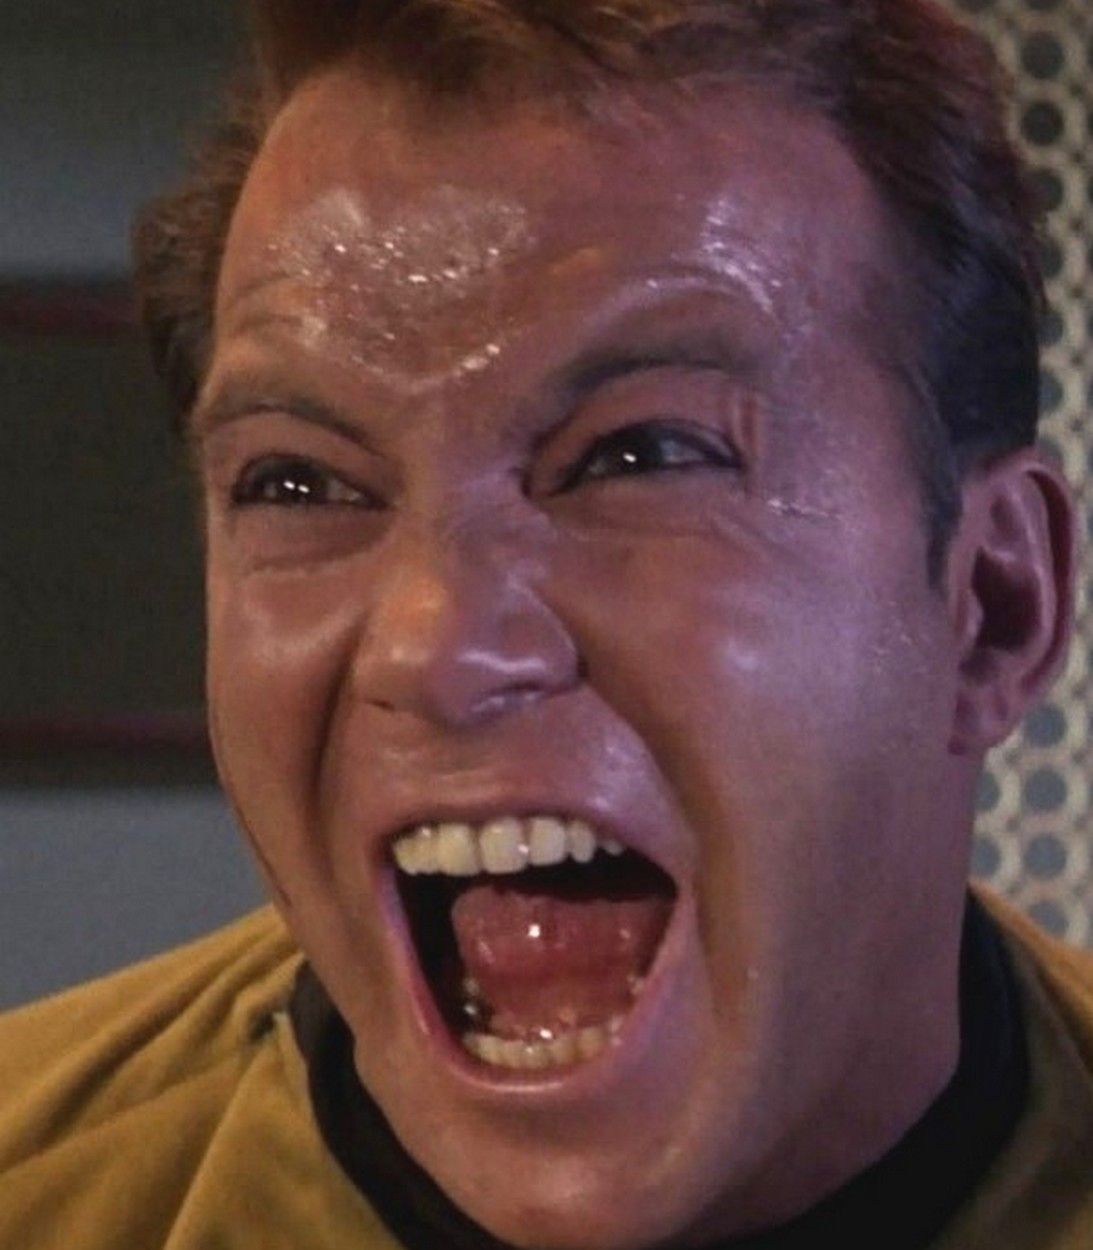 William Shatner as Evil Kirk in Star Trek vertical